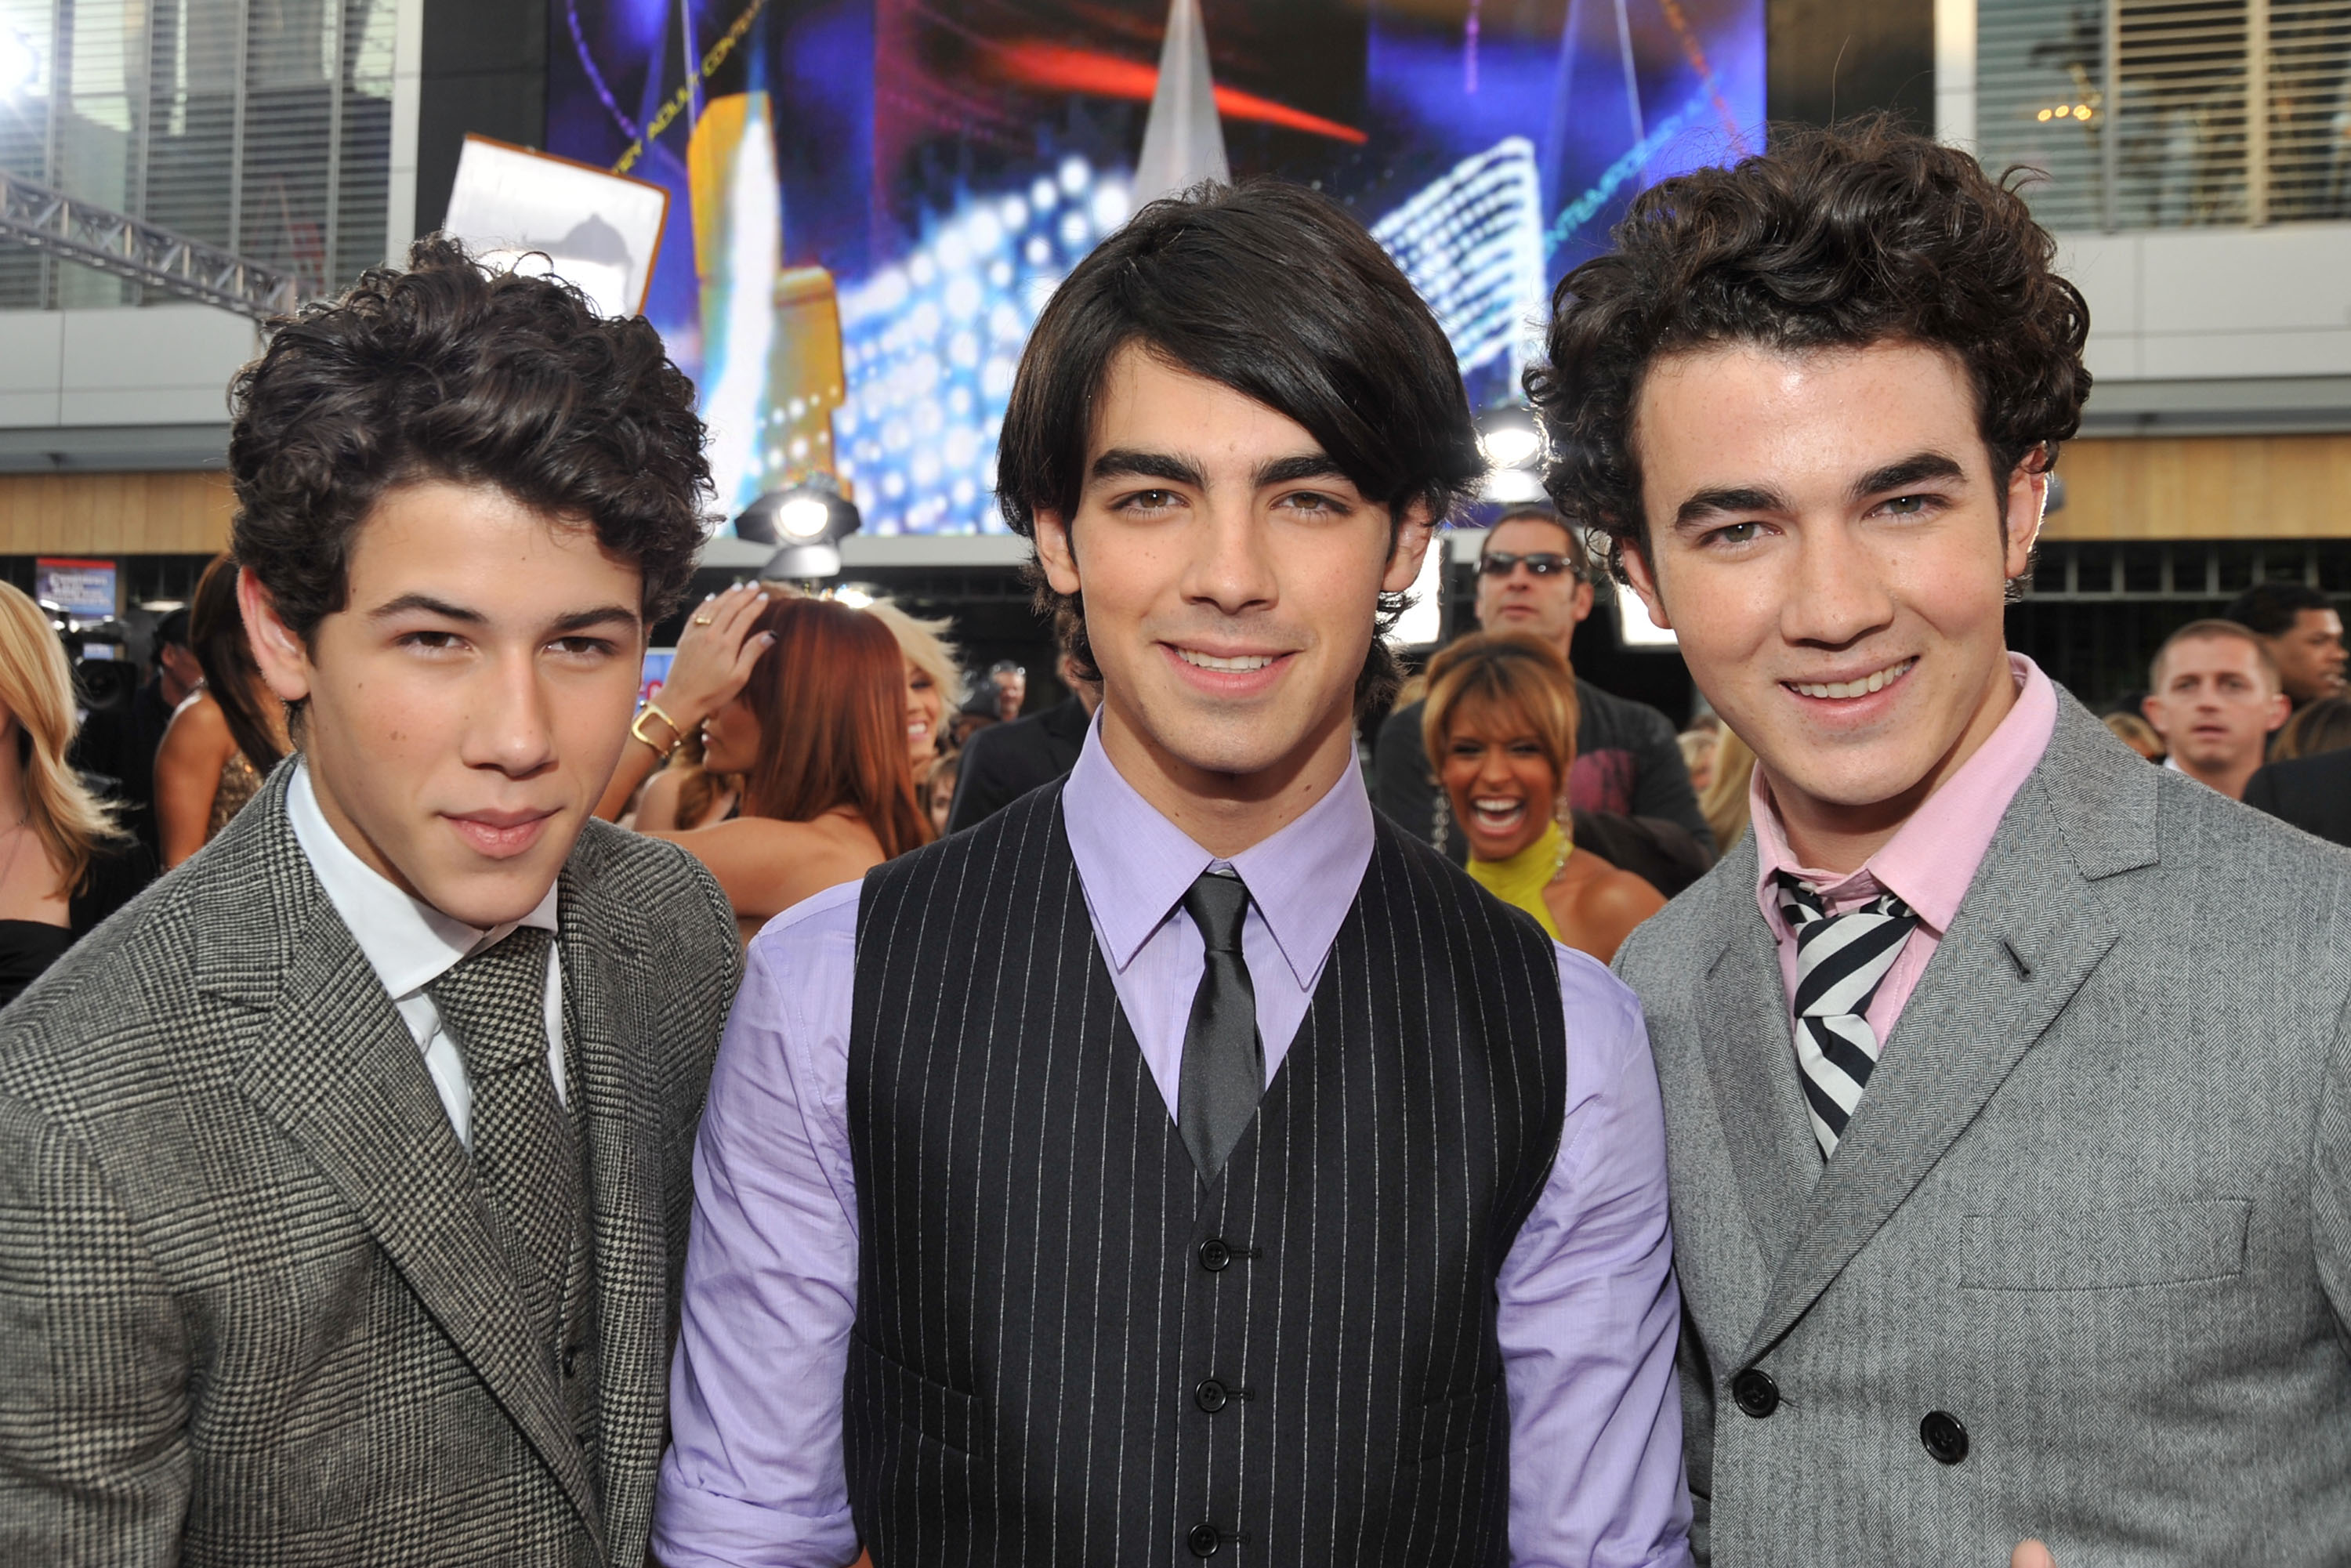 Jonas brothers песни. Братья Джонас. Группа Jonas brothers. Jonas brothers 2005. Братья Джонас молодые.